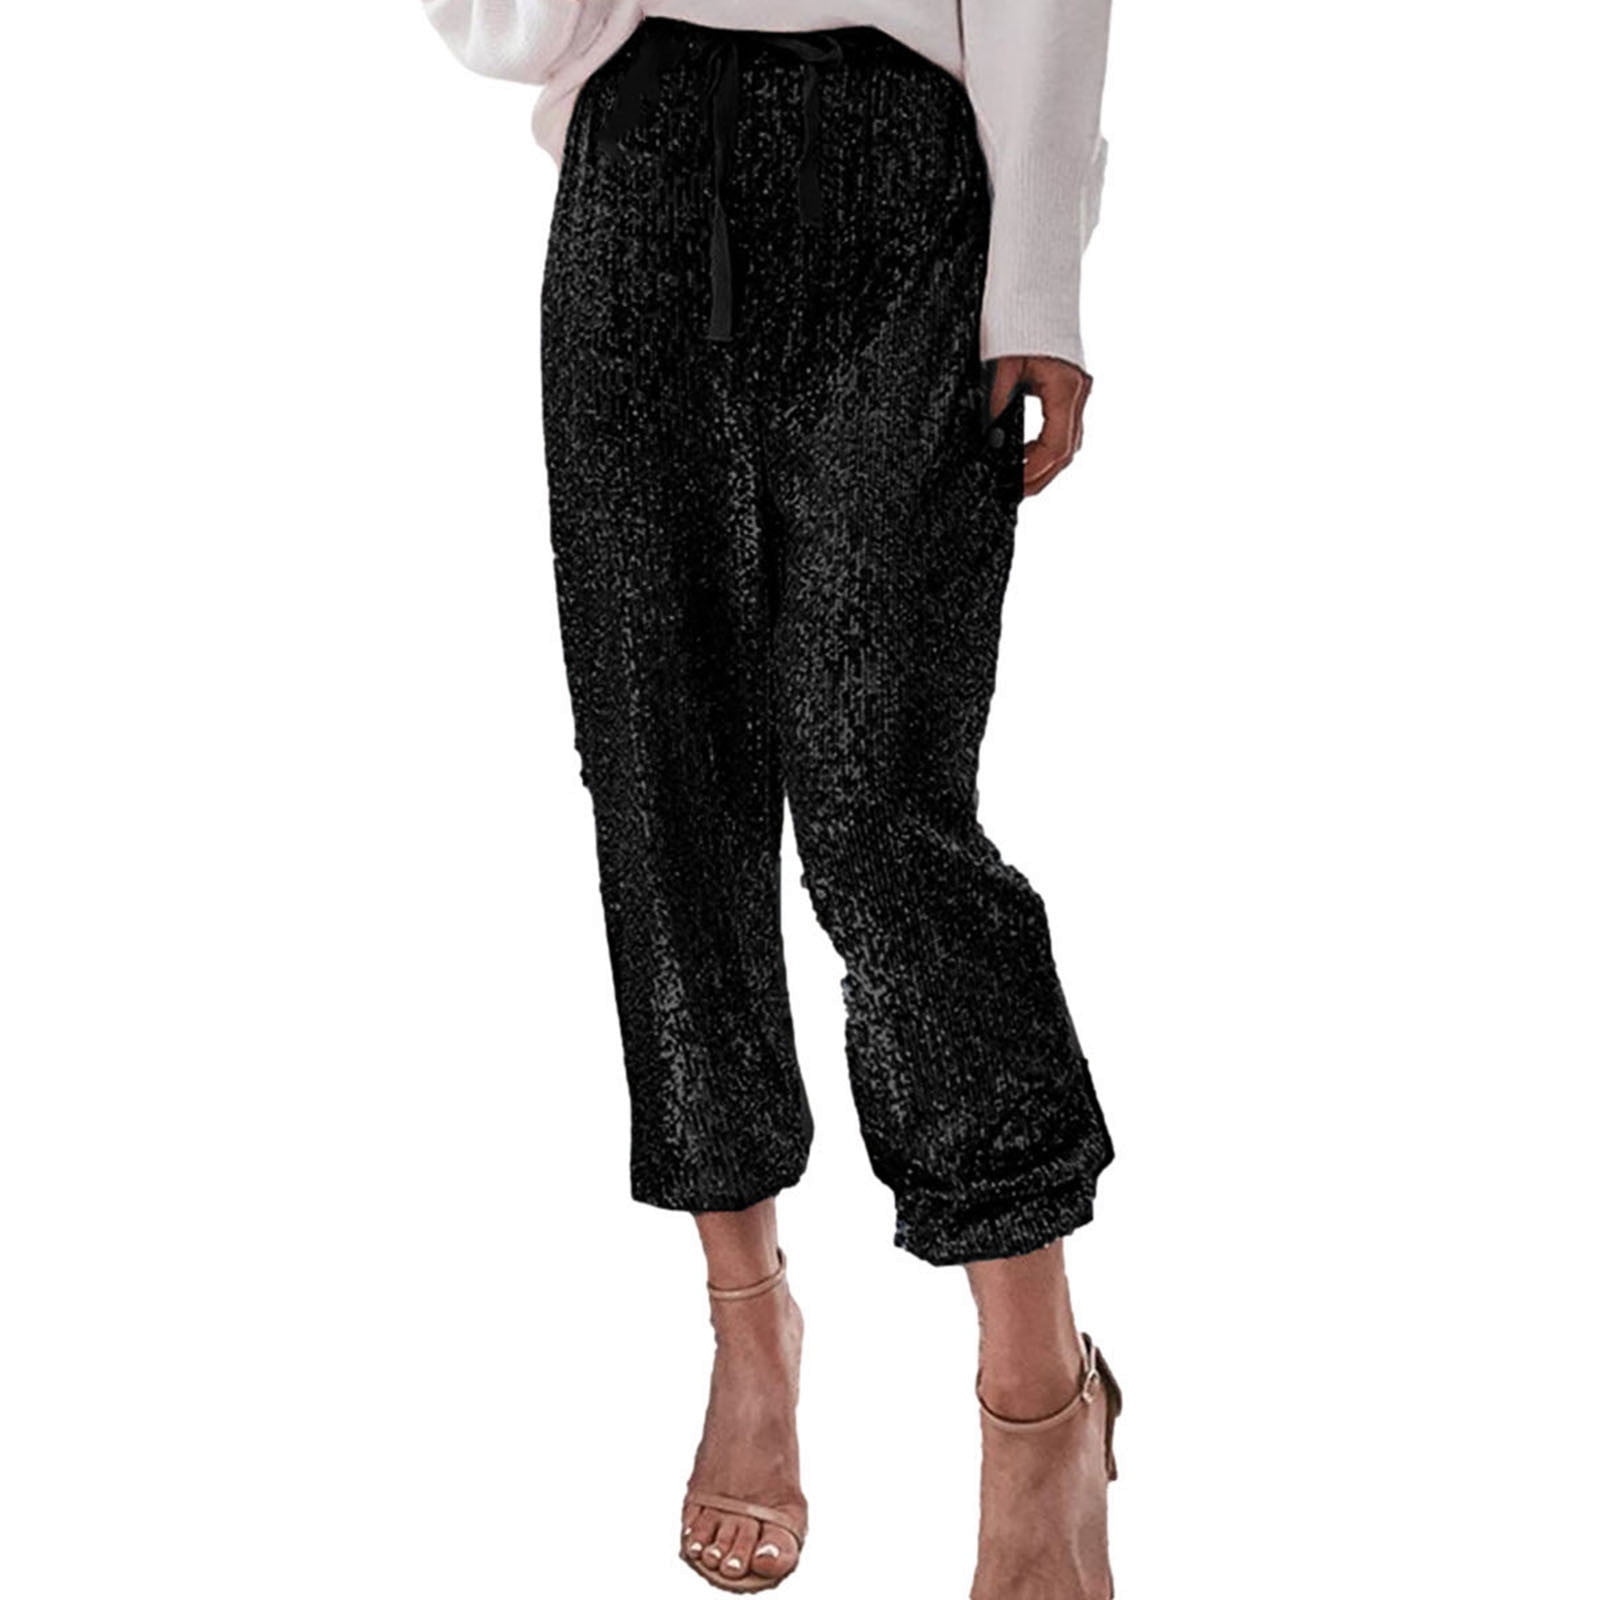 Hfyihgf Womens Sequin Glitter Pants Drawstring Waist Baggy Joggers Pant Hip  Hop Party Club Wear Shiny Trousers(Black,S) 